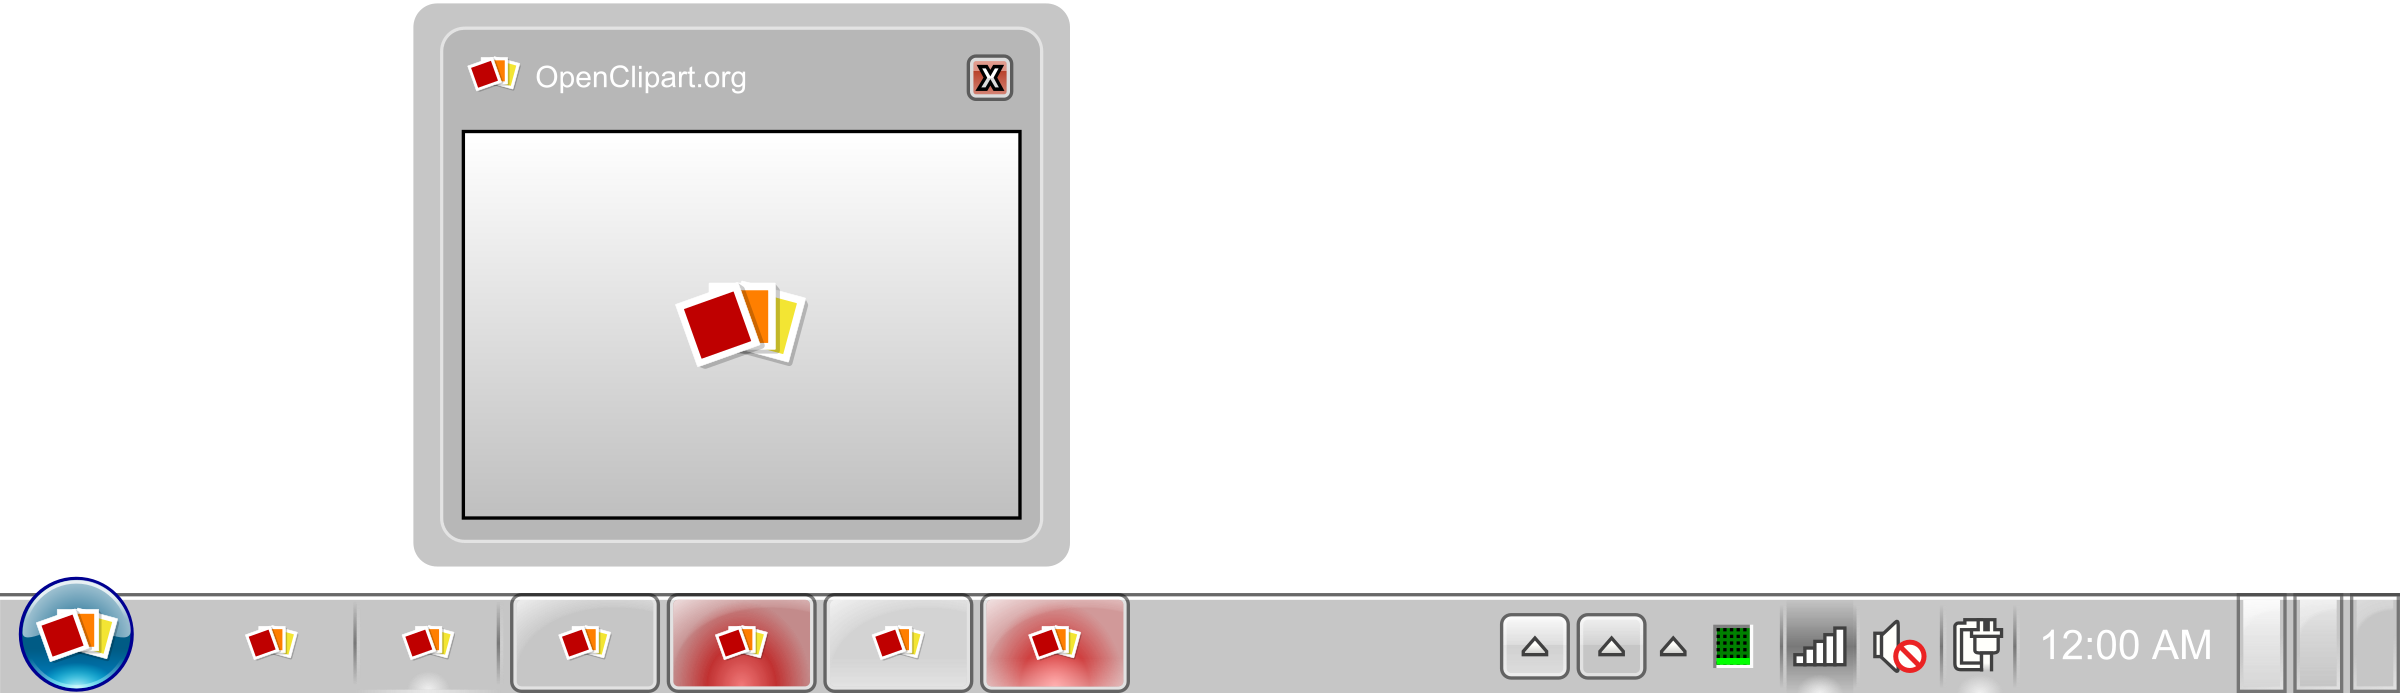 Windows taskbar png. Clipart big image